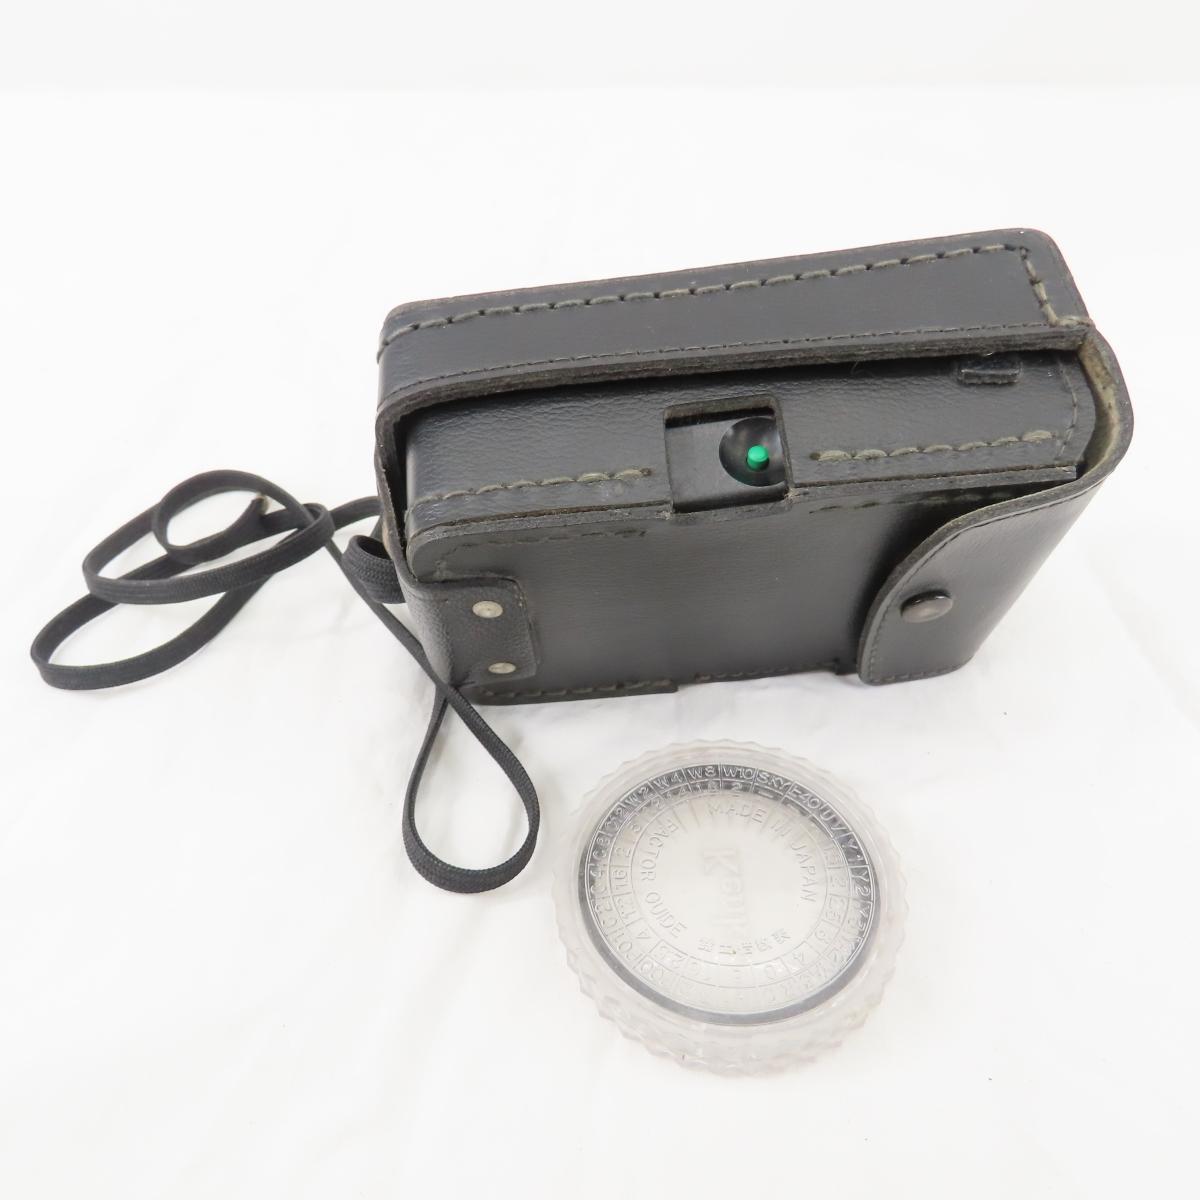 Minolta XE-7 35mm Film Camera with lenses